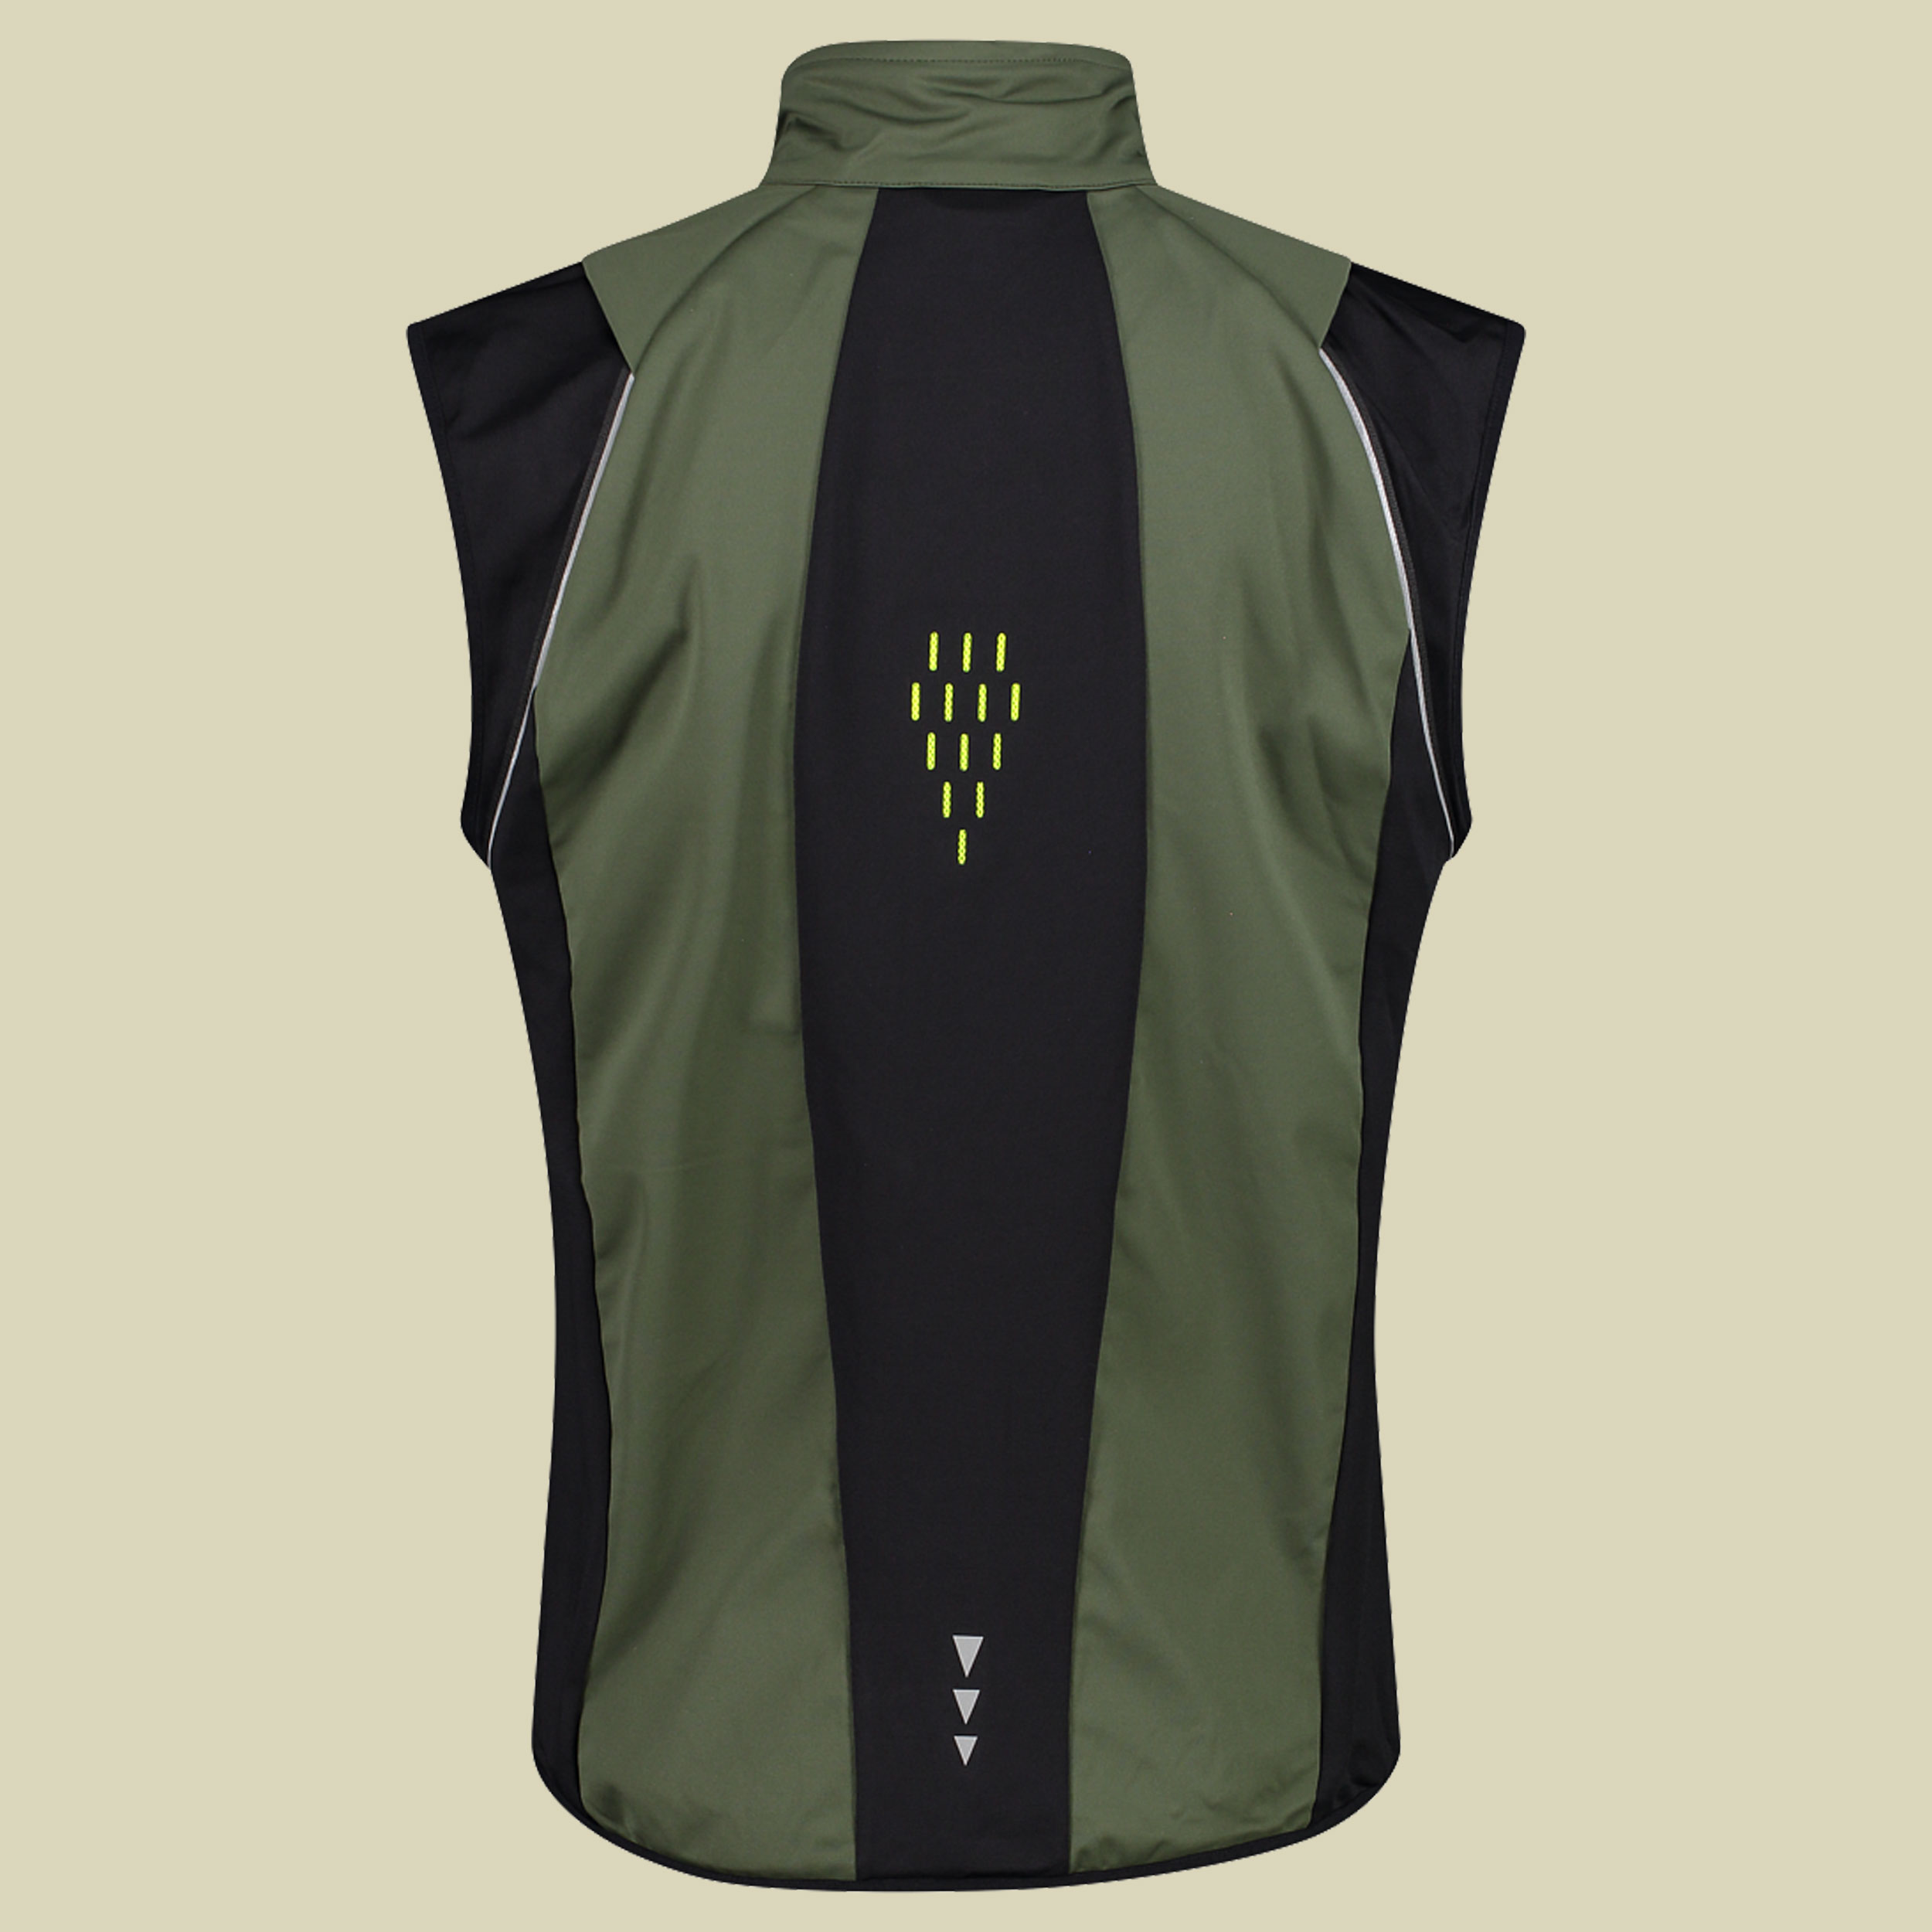 Man Jacket detachable Sleeves 30A2647 Größe 52 Farbe 15EP oil green-nero